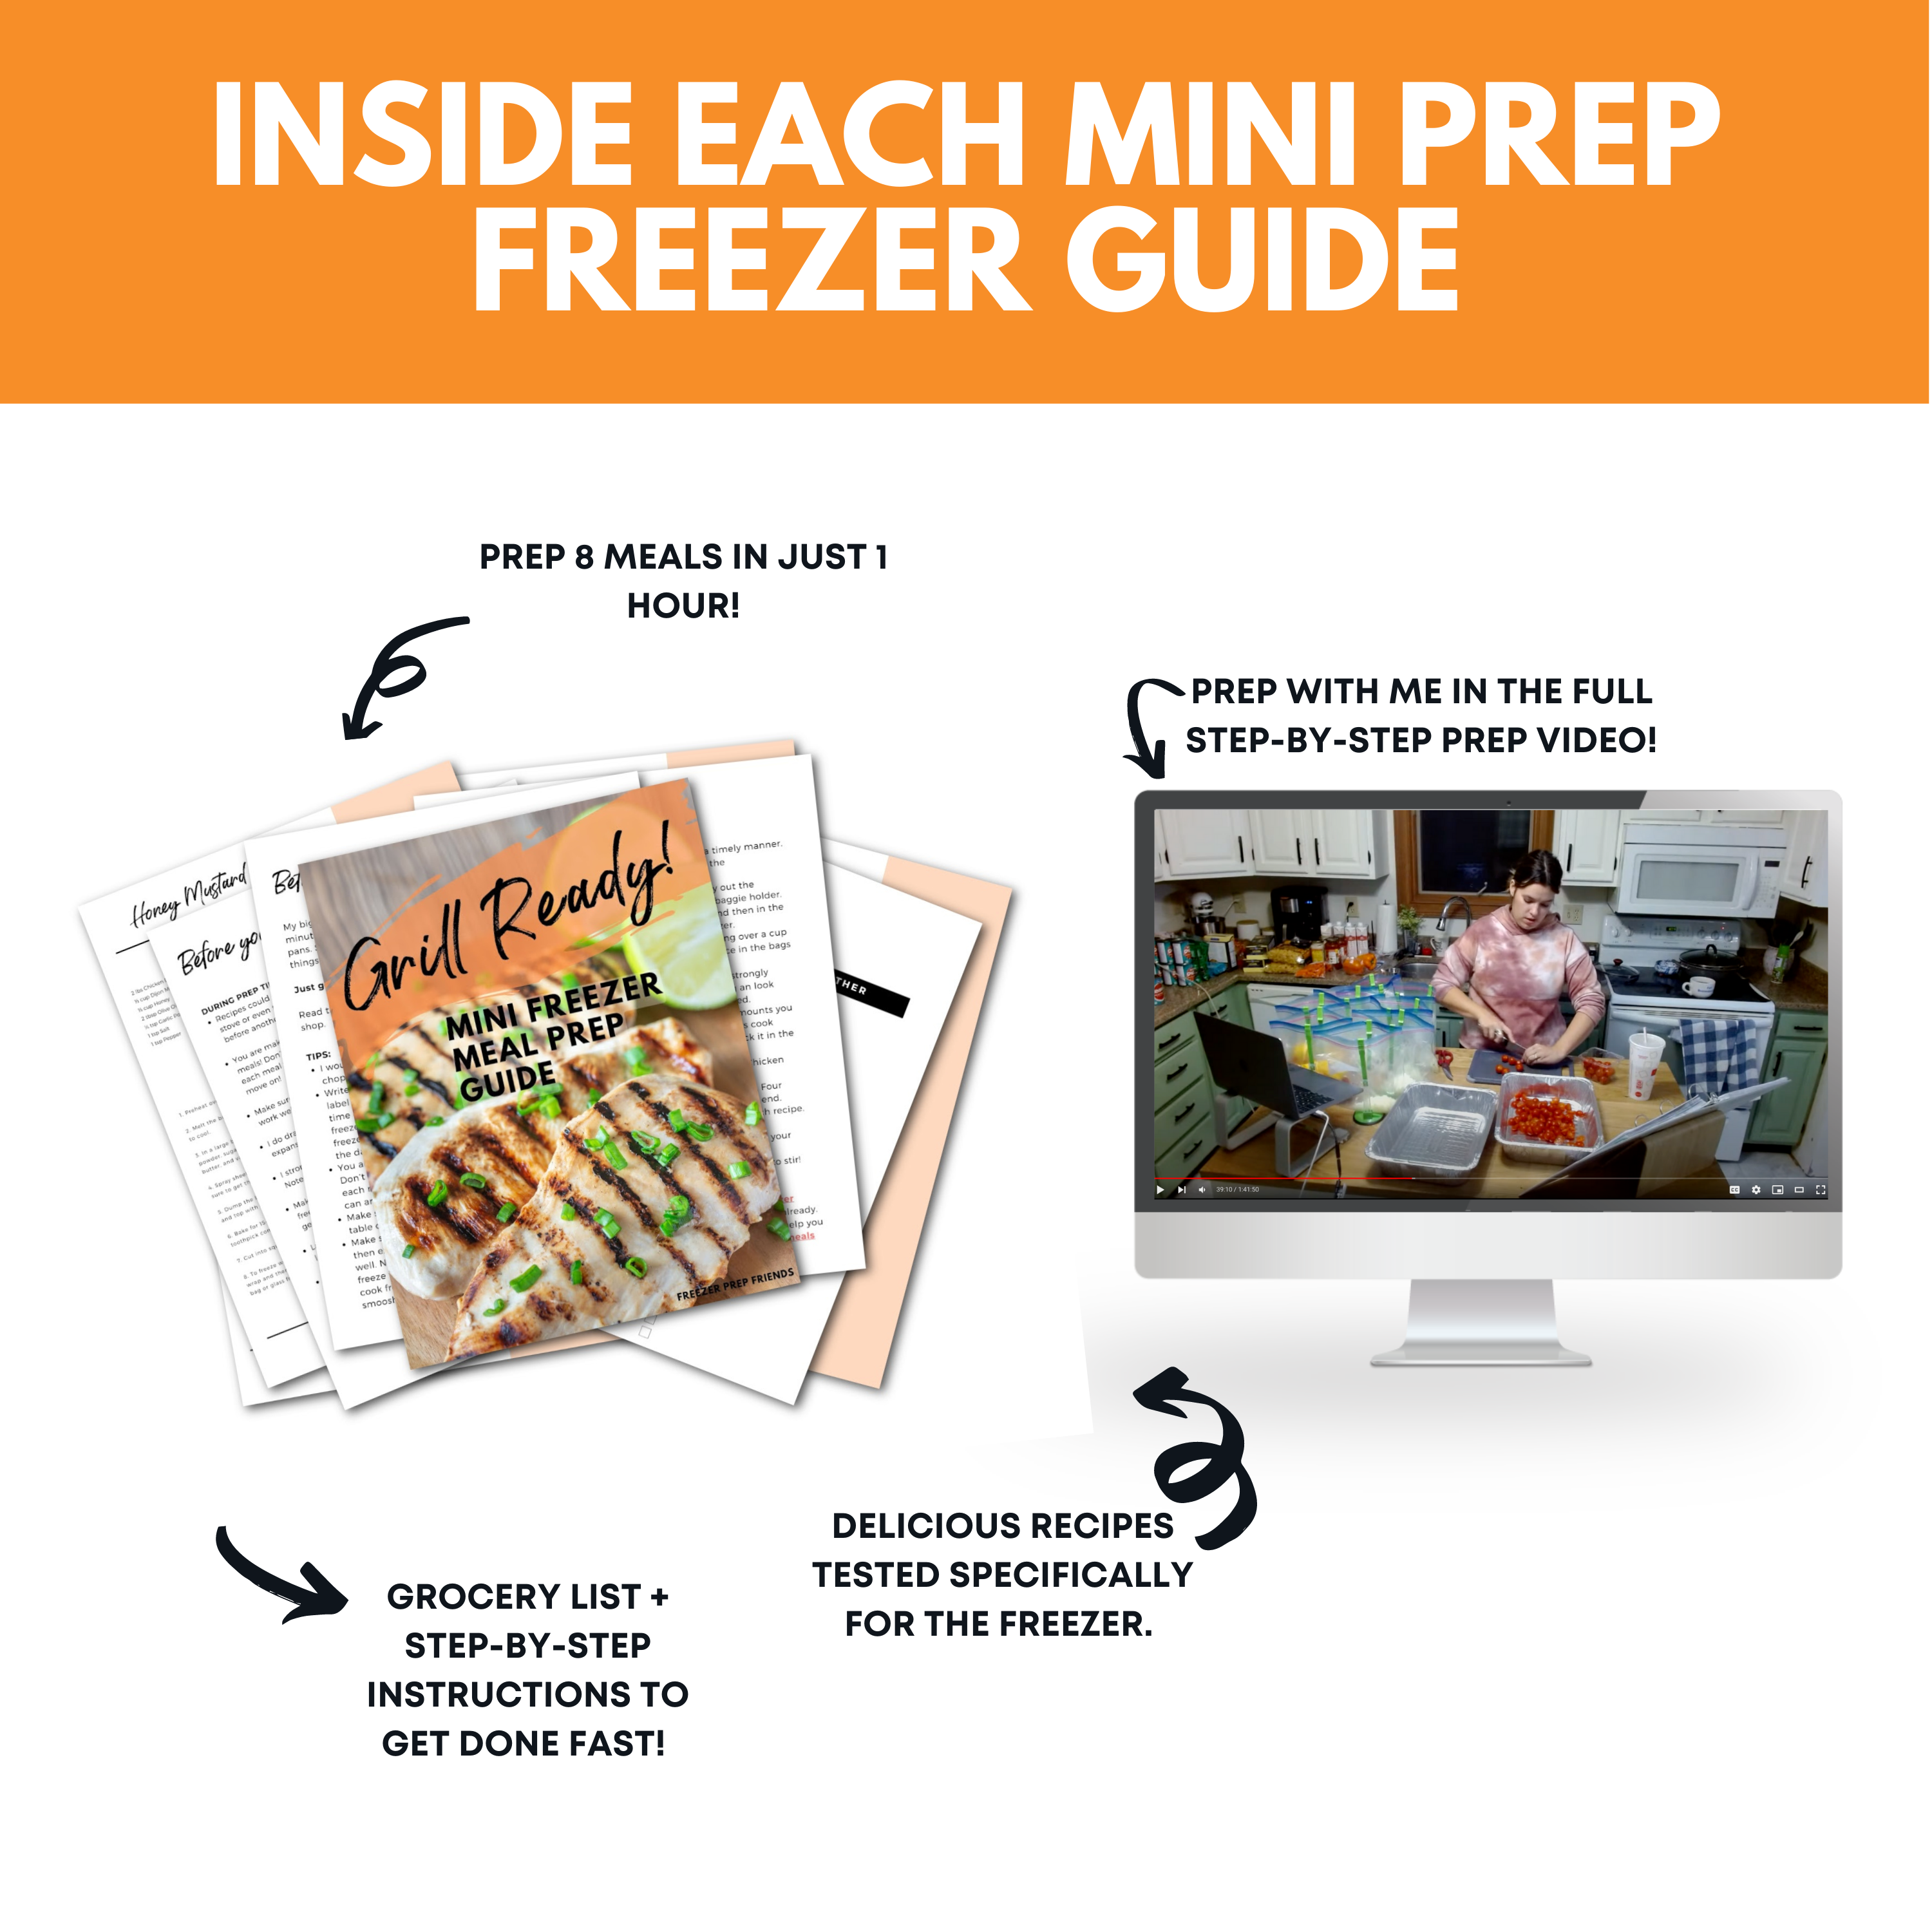 Grill Ready Mini Freezer Prep